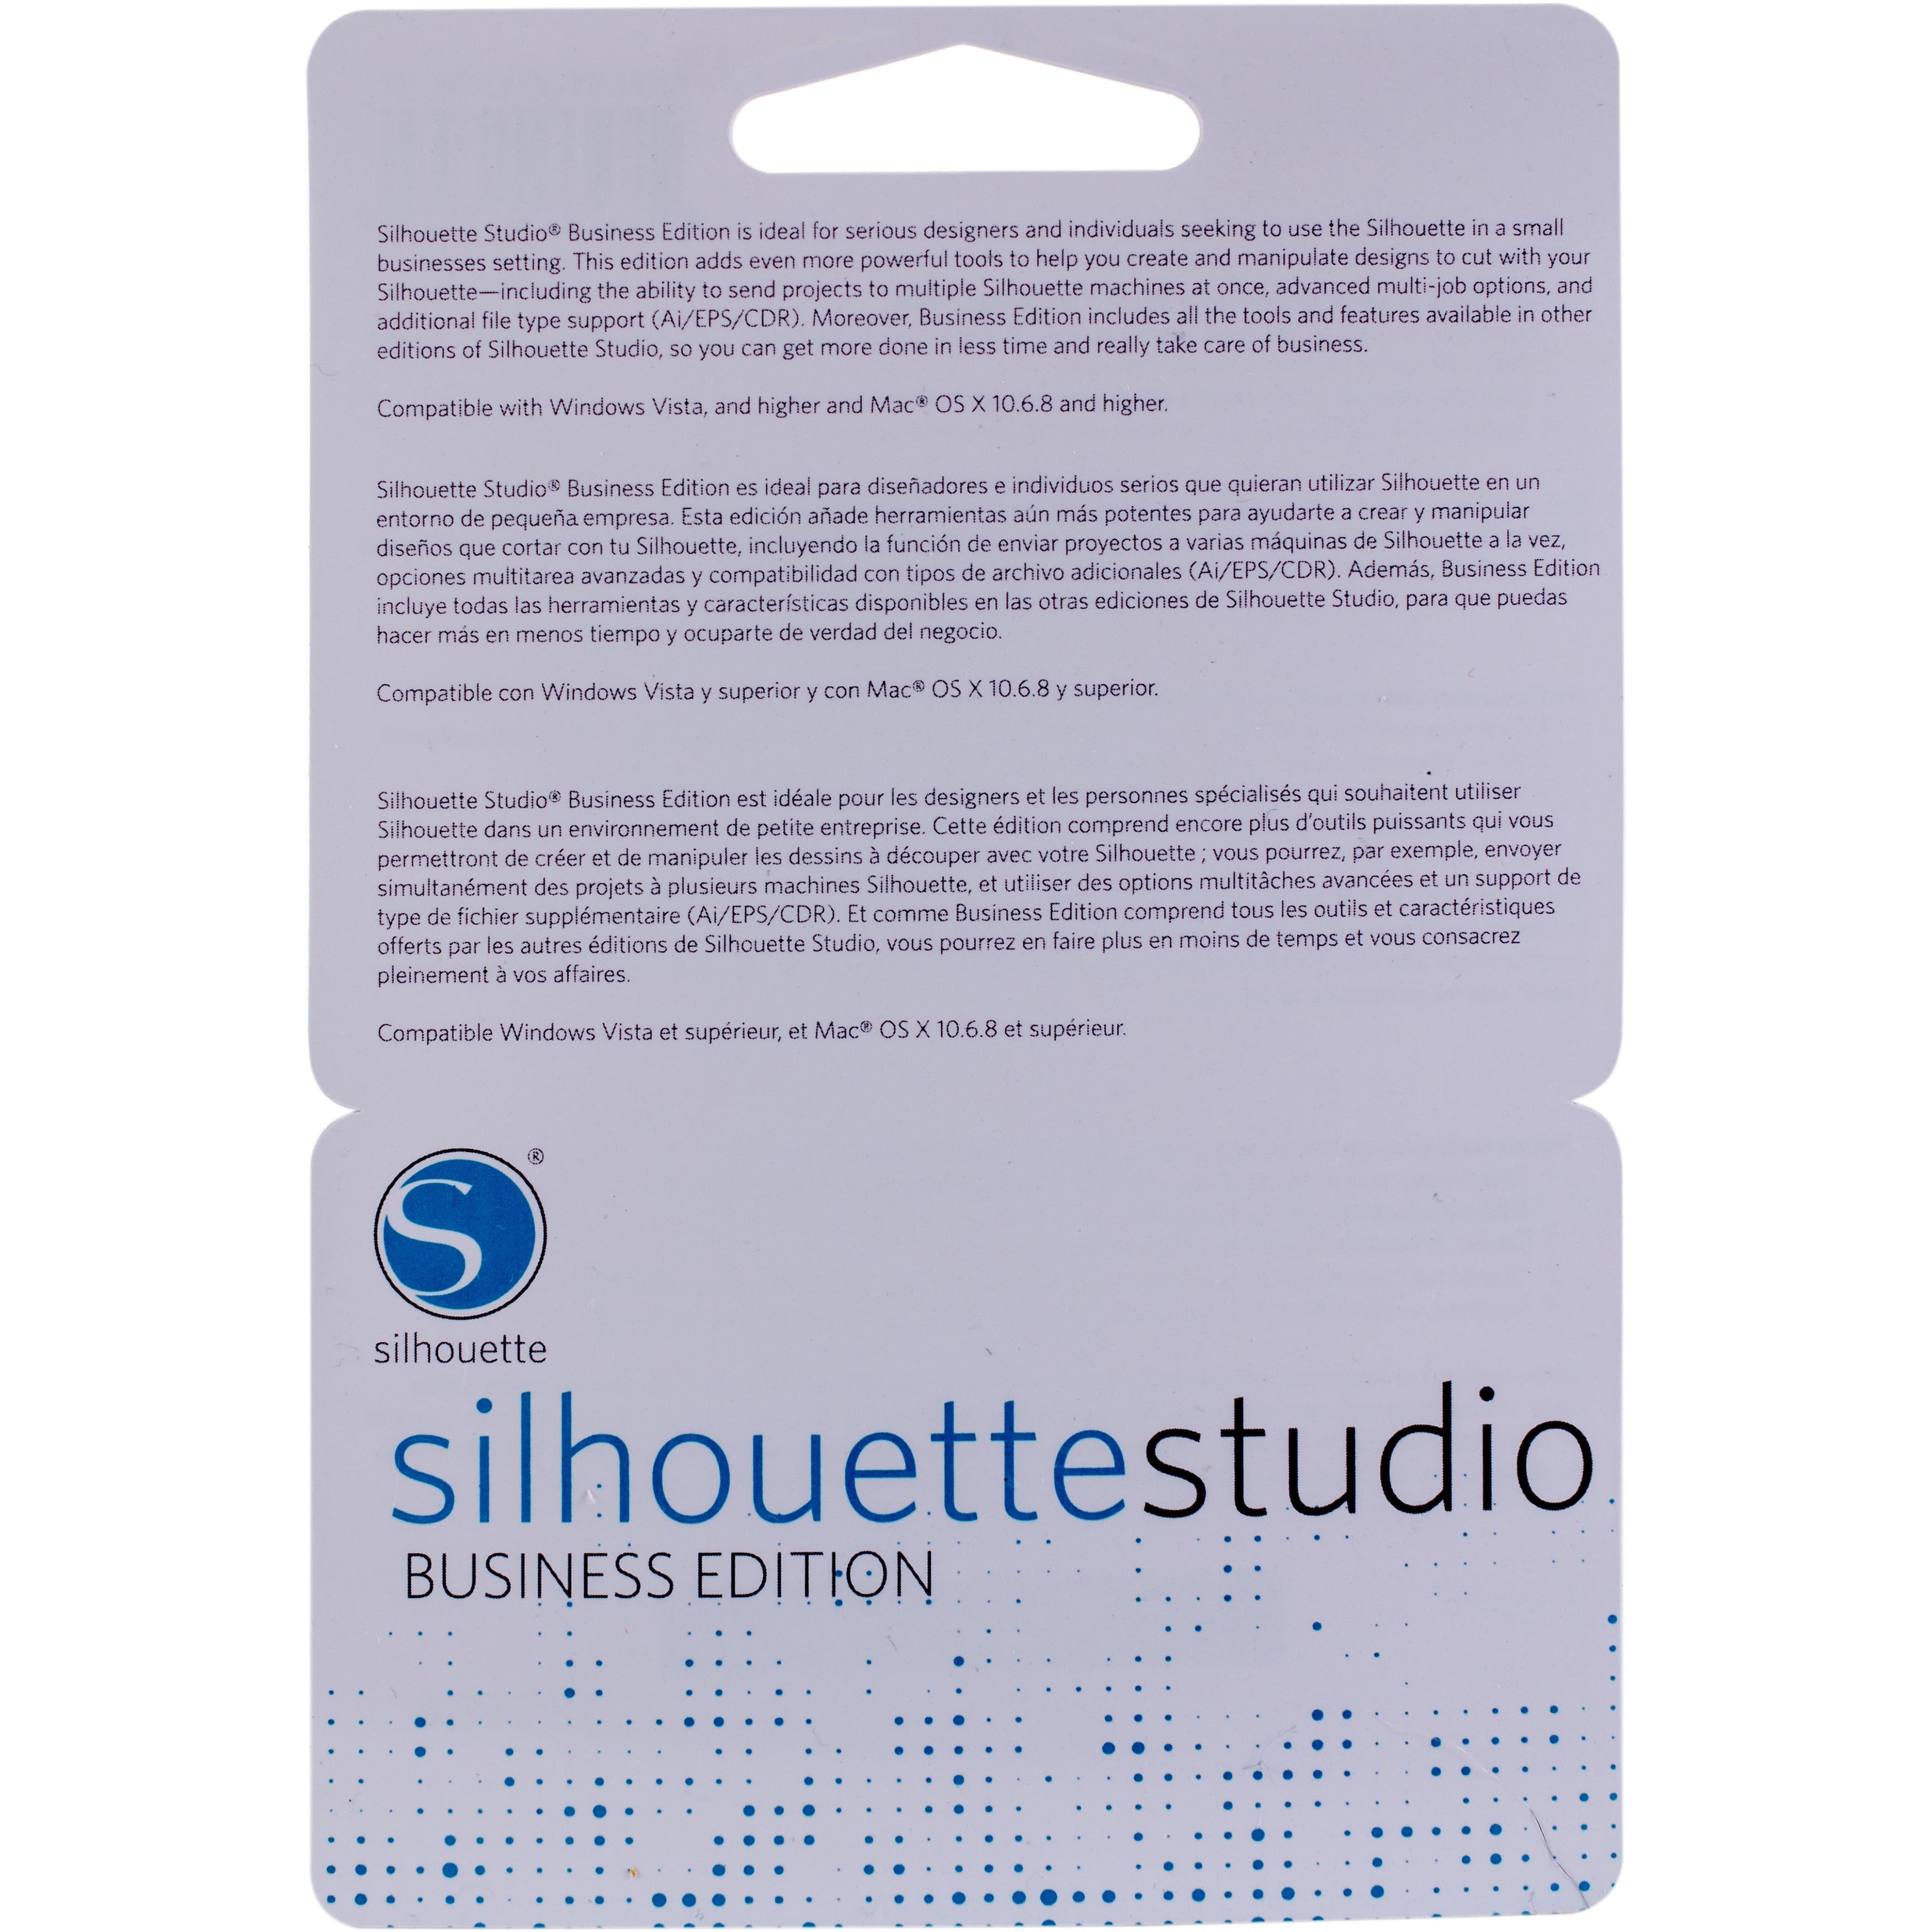 silhouette studio business edition vs deigner